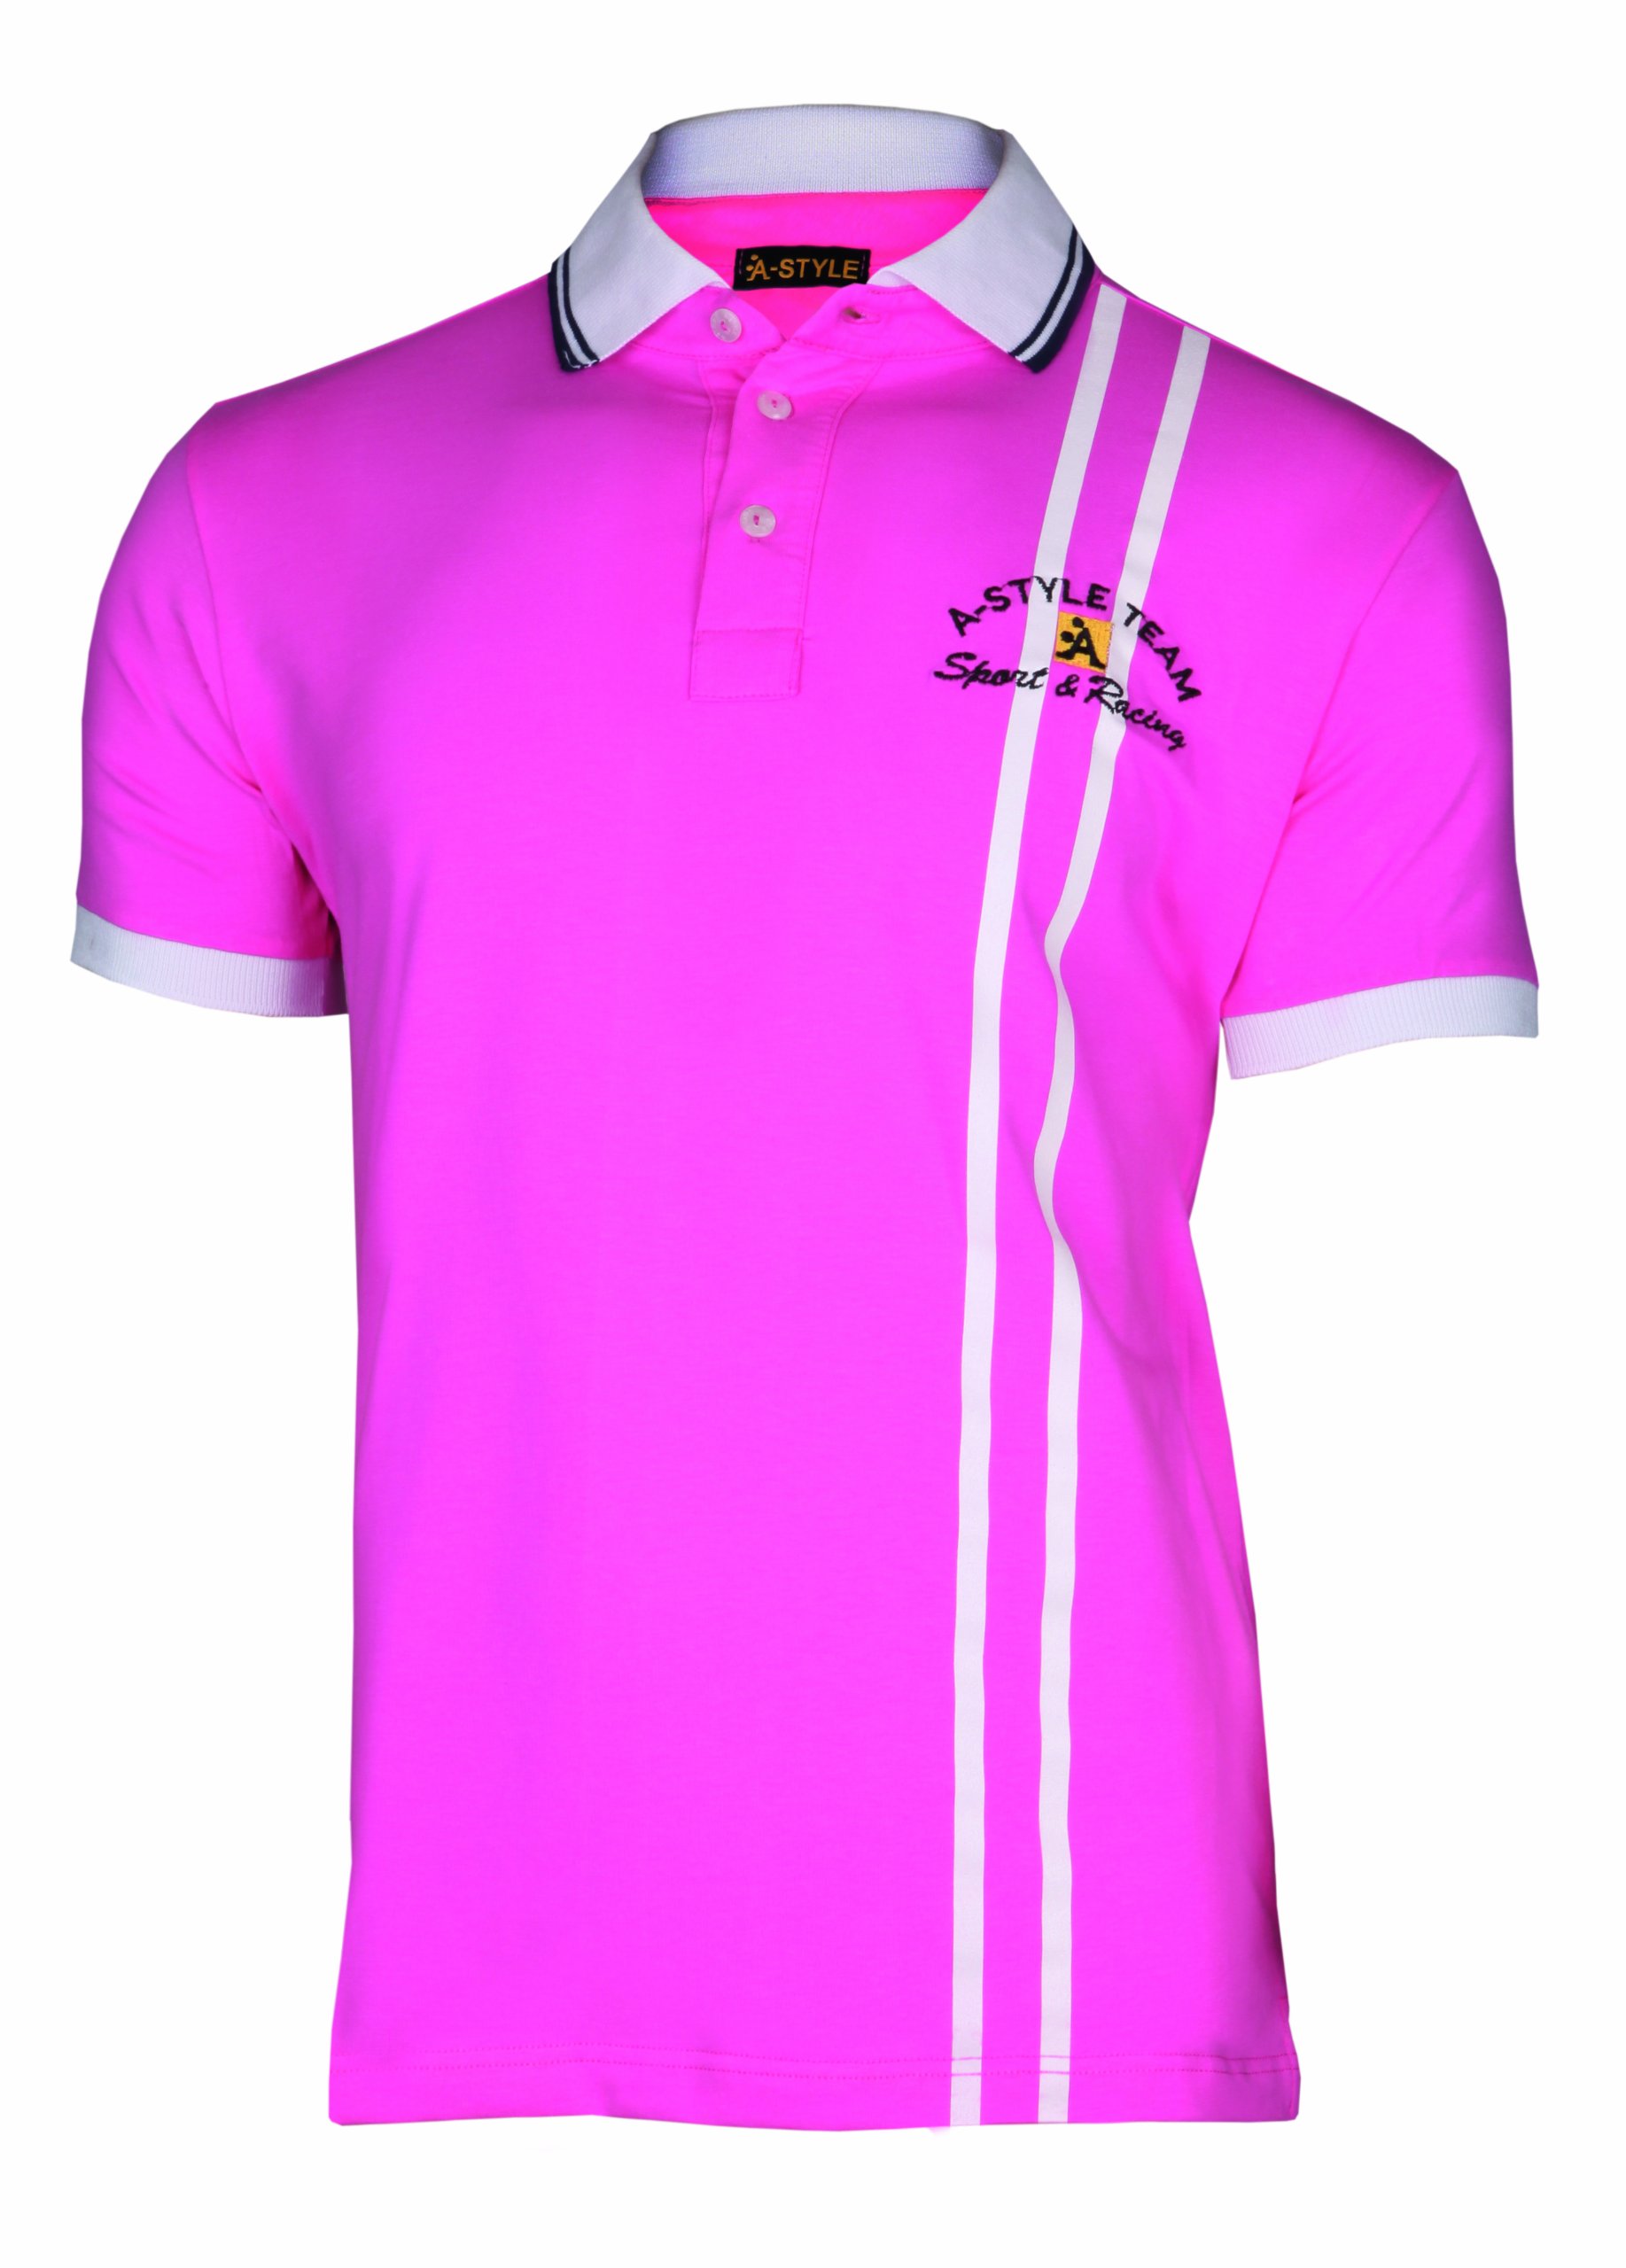 A-Style Polo Shirt Stripes, Rosa, XXL von A-Style